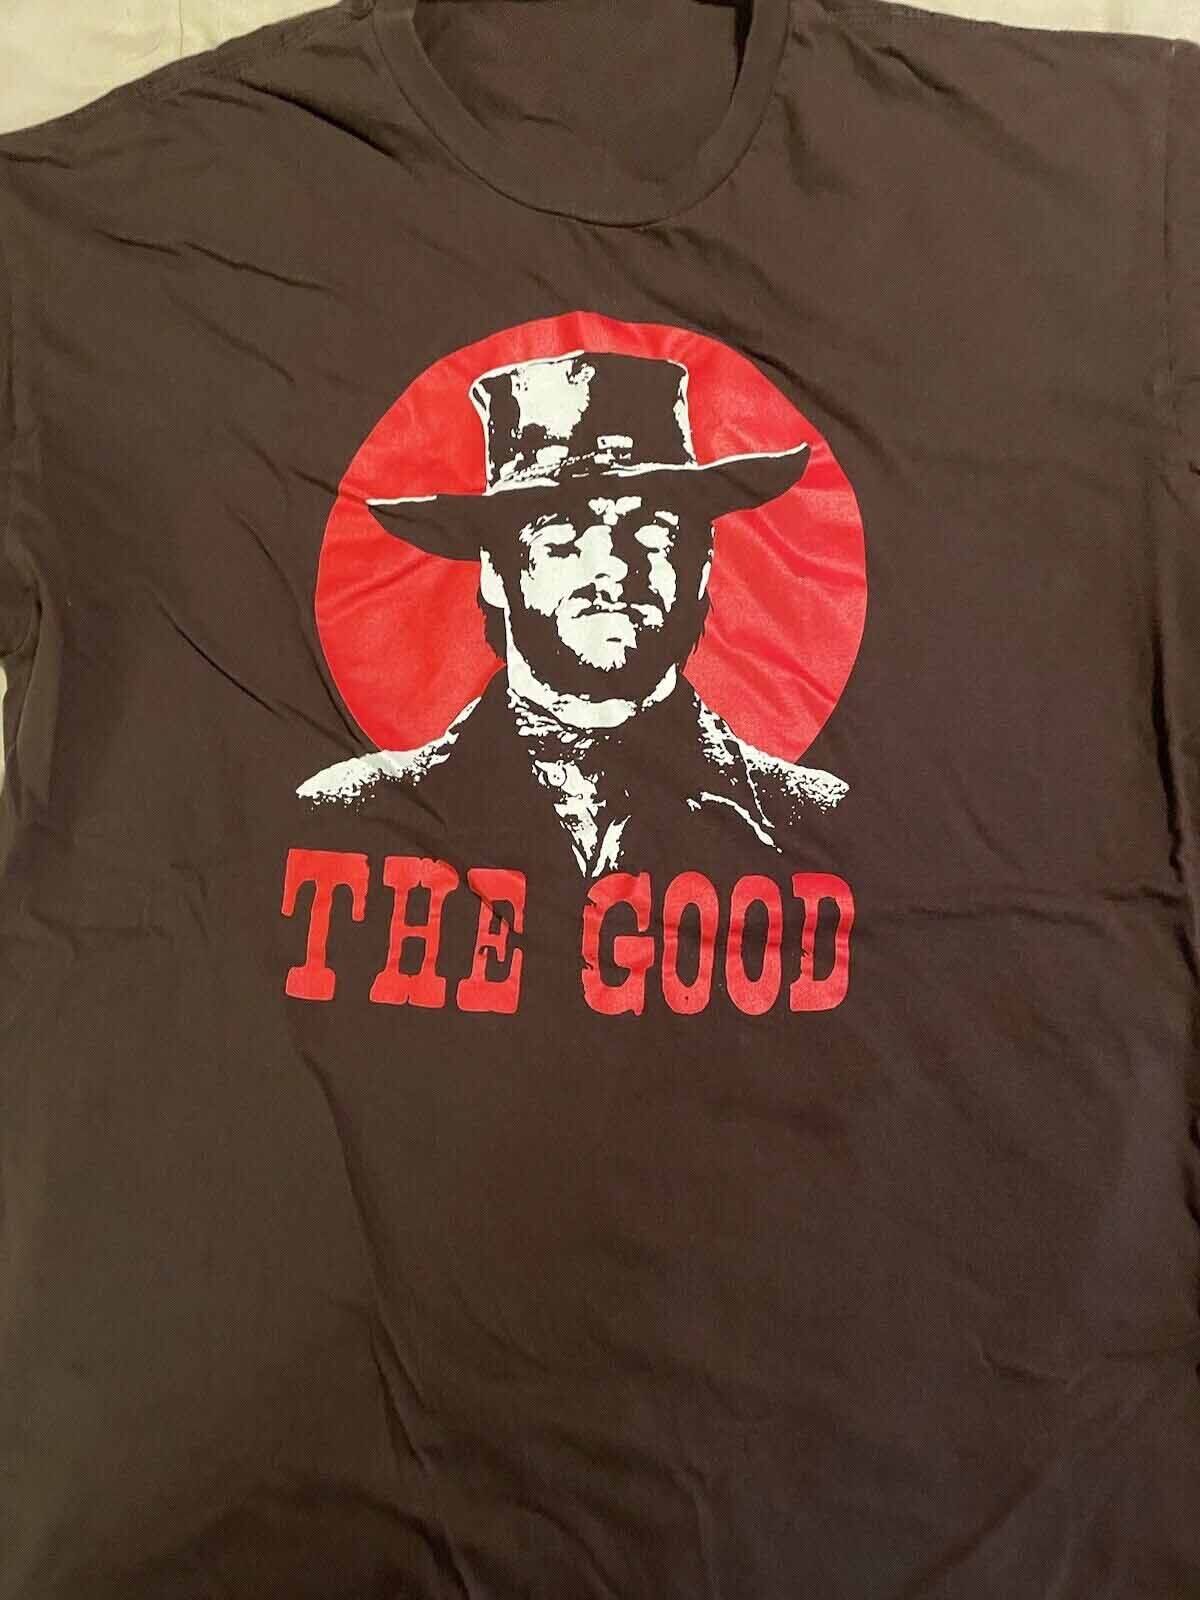 The Good Clint Eastwood Shirt Short Sleeve Black Mens Unisex S-2345XL